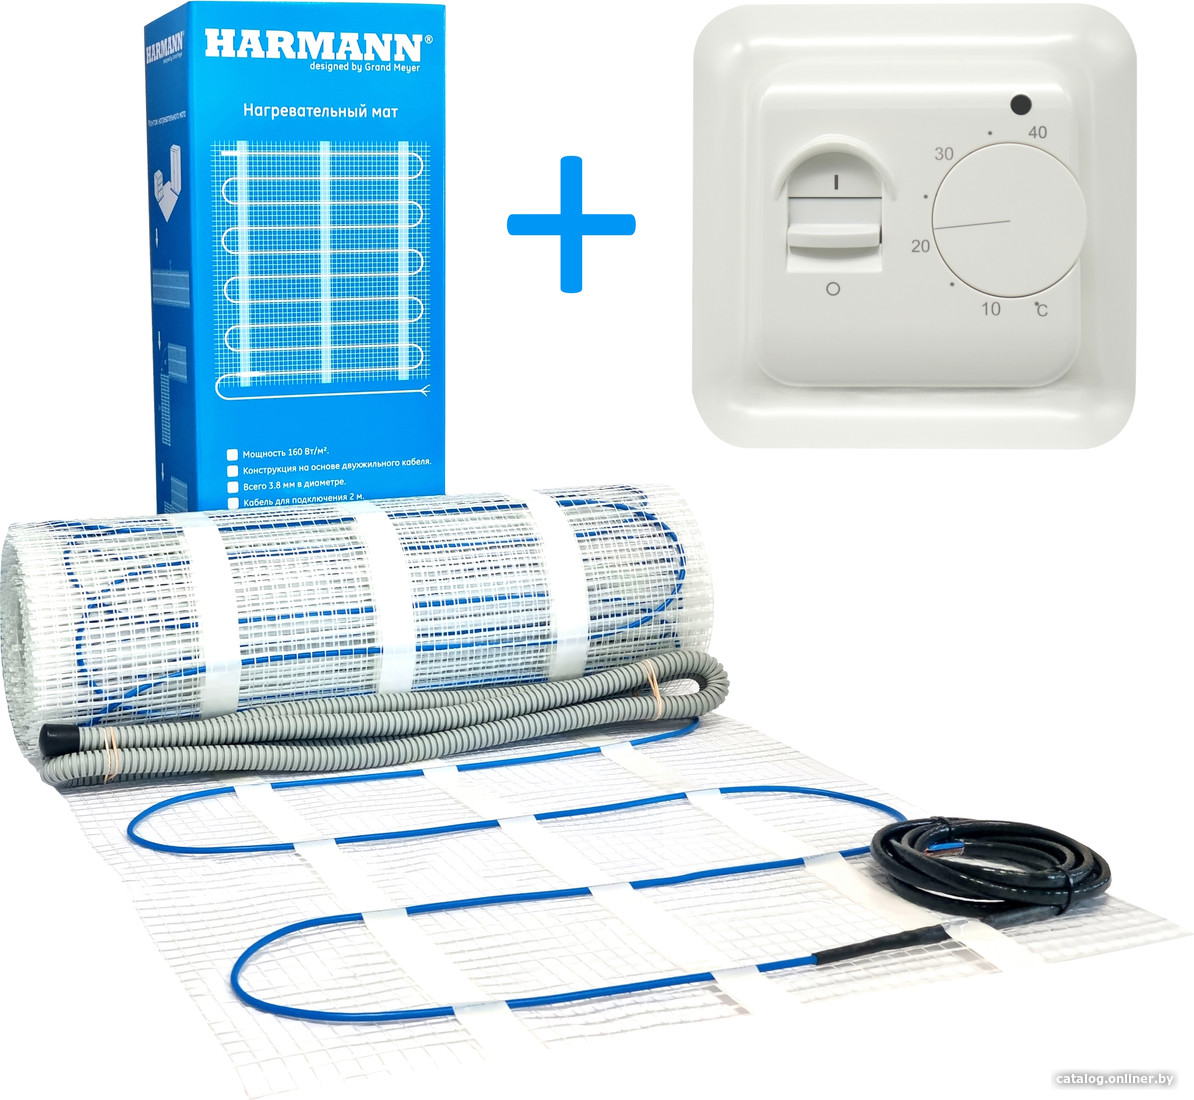 

Нагревательный мат Harmann W160-090 9 кв.м. 1440 Вт (с терморегулятором MST-1)